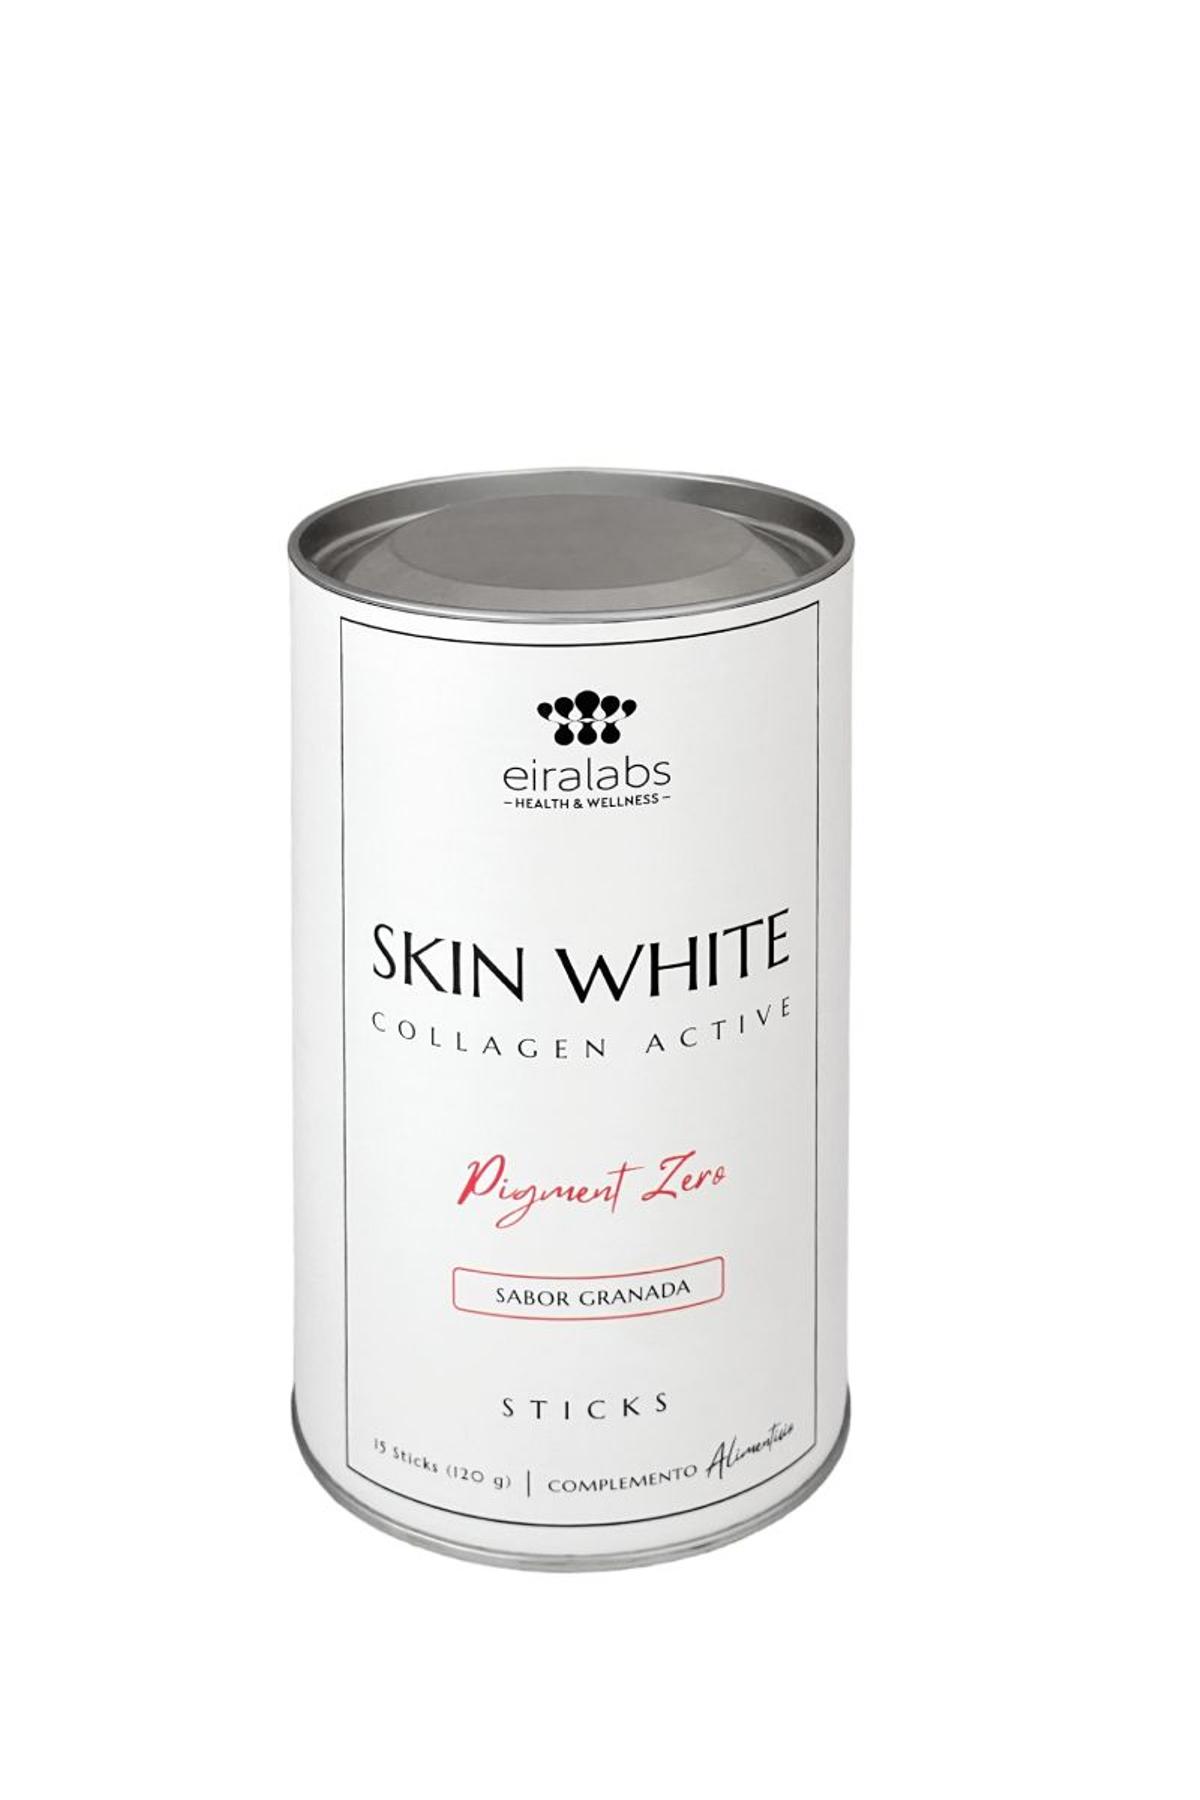 Premio Cuidado de Belleza desde el Interior: Skin White Sticks Collagen Active, de Eiralabs